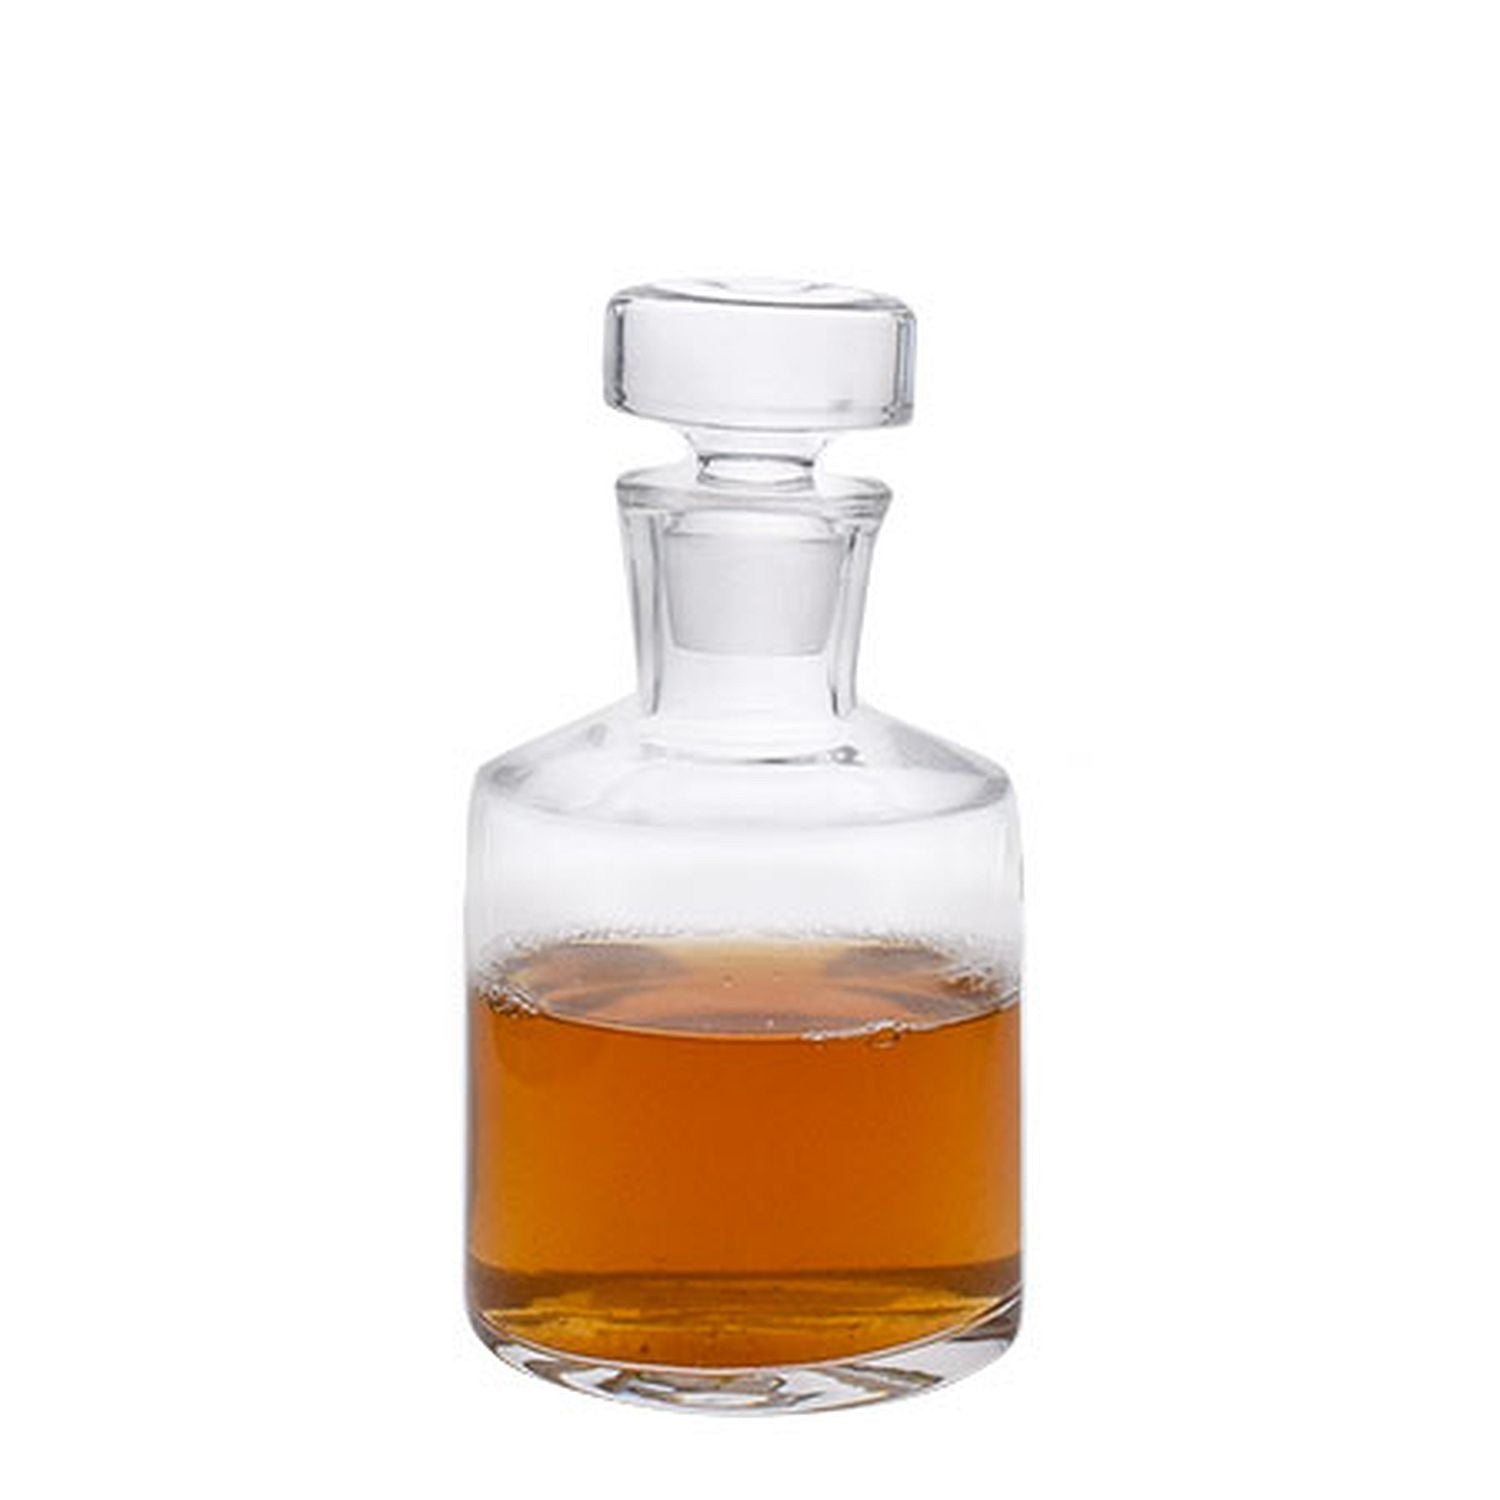 VinoLife - Malt Whisky Decanter